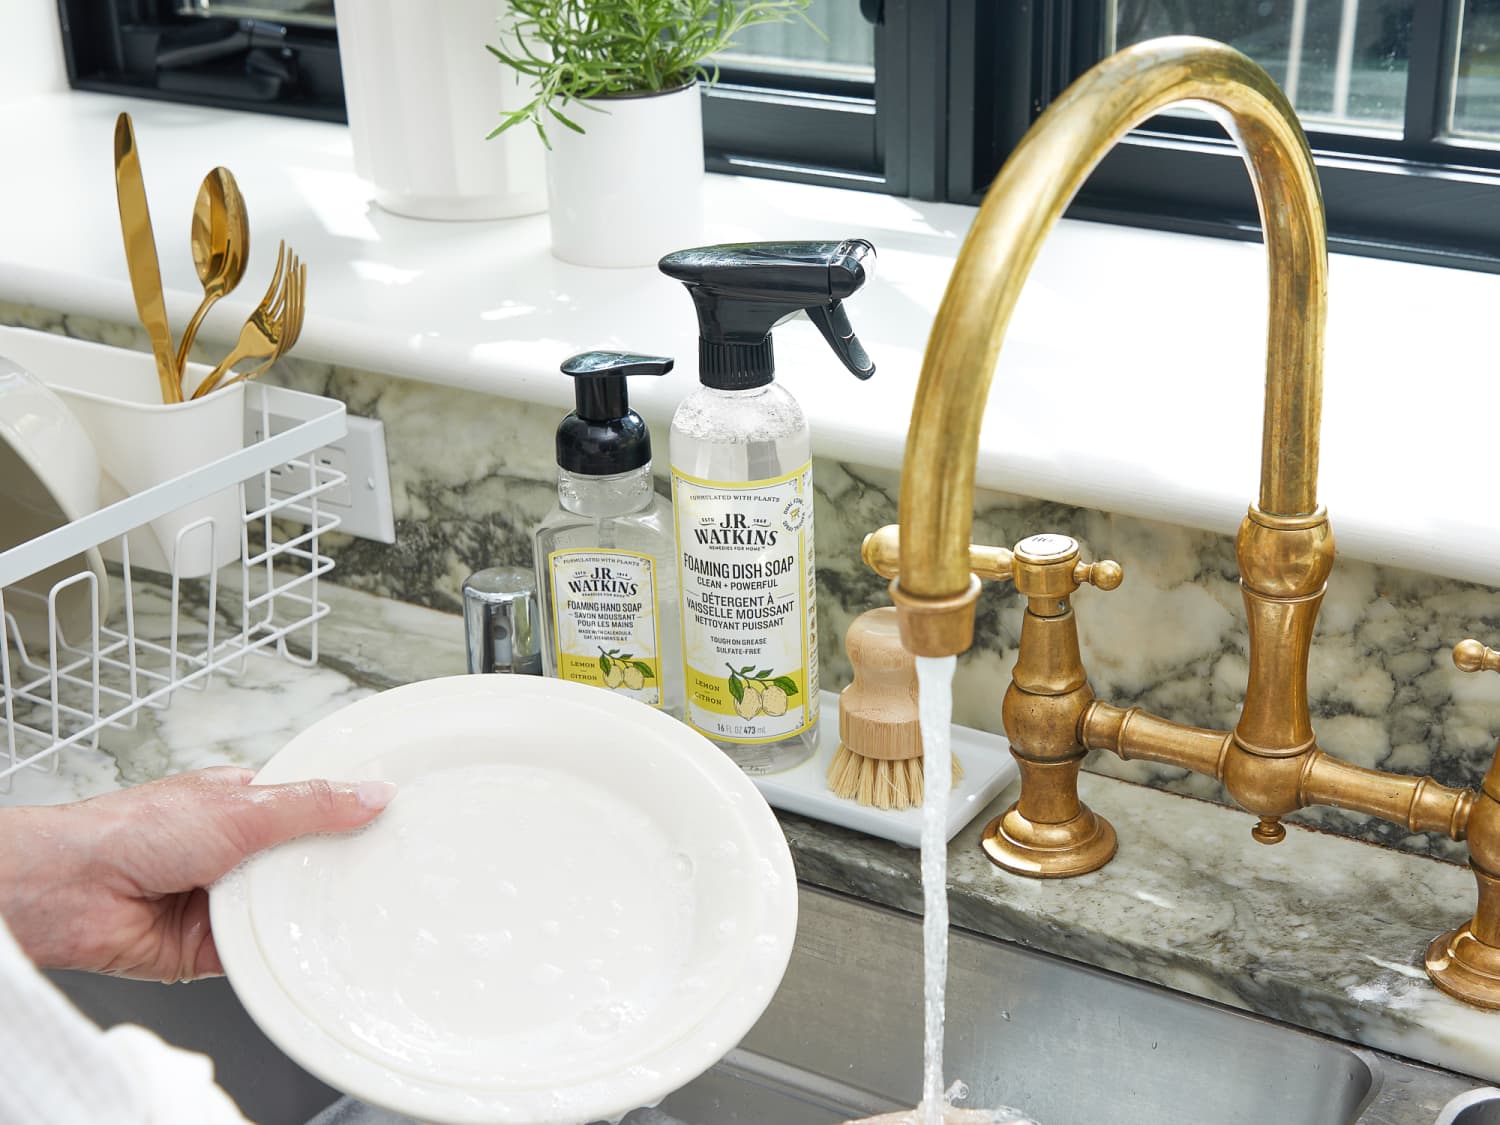 https://cdn.apartmenttherapy.info/image/upload/f_jpg,q_auto:eco,c_fill,g_auto,w_1500,ar_4:3/jr-watkins-foaming-dish-soap